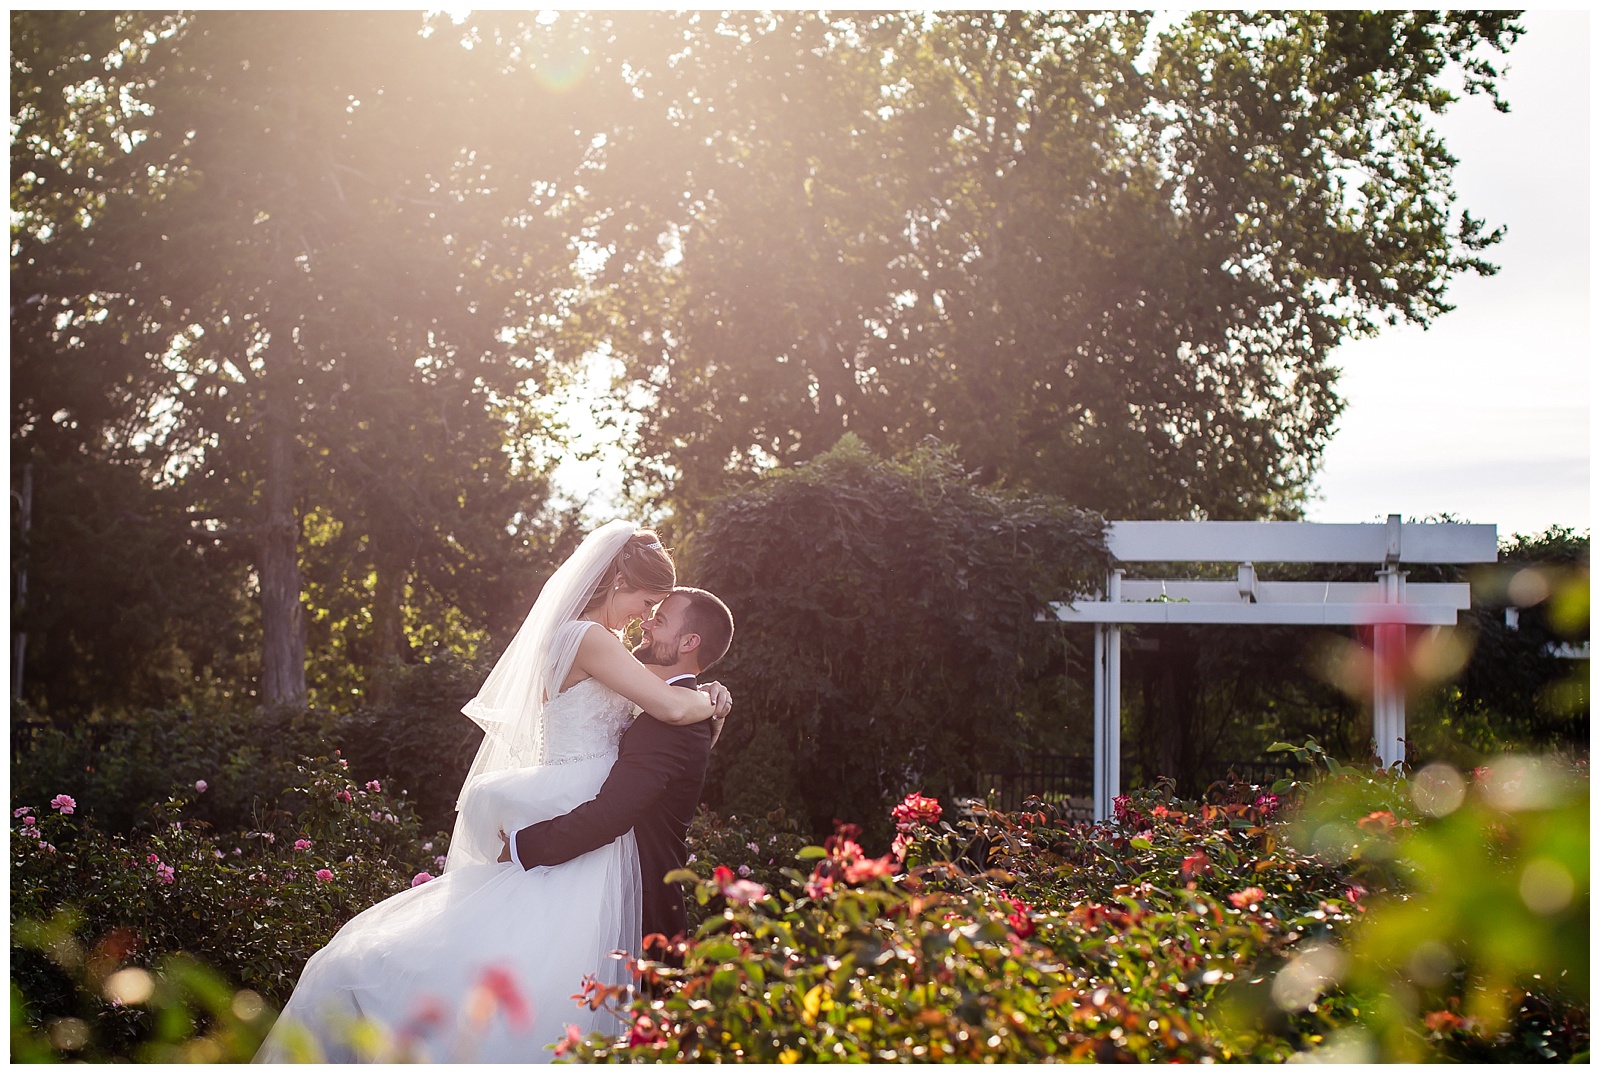 Wedding photography at Gage Park in Topeka, Kansas.